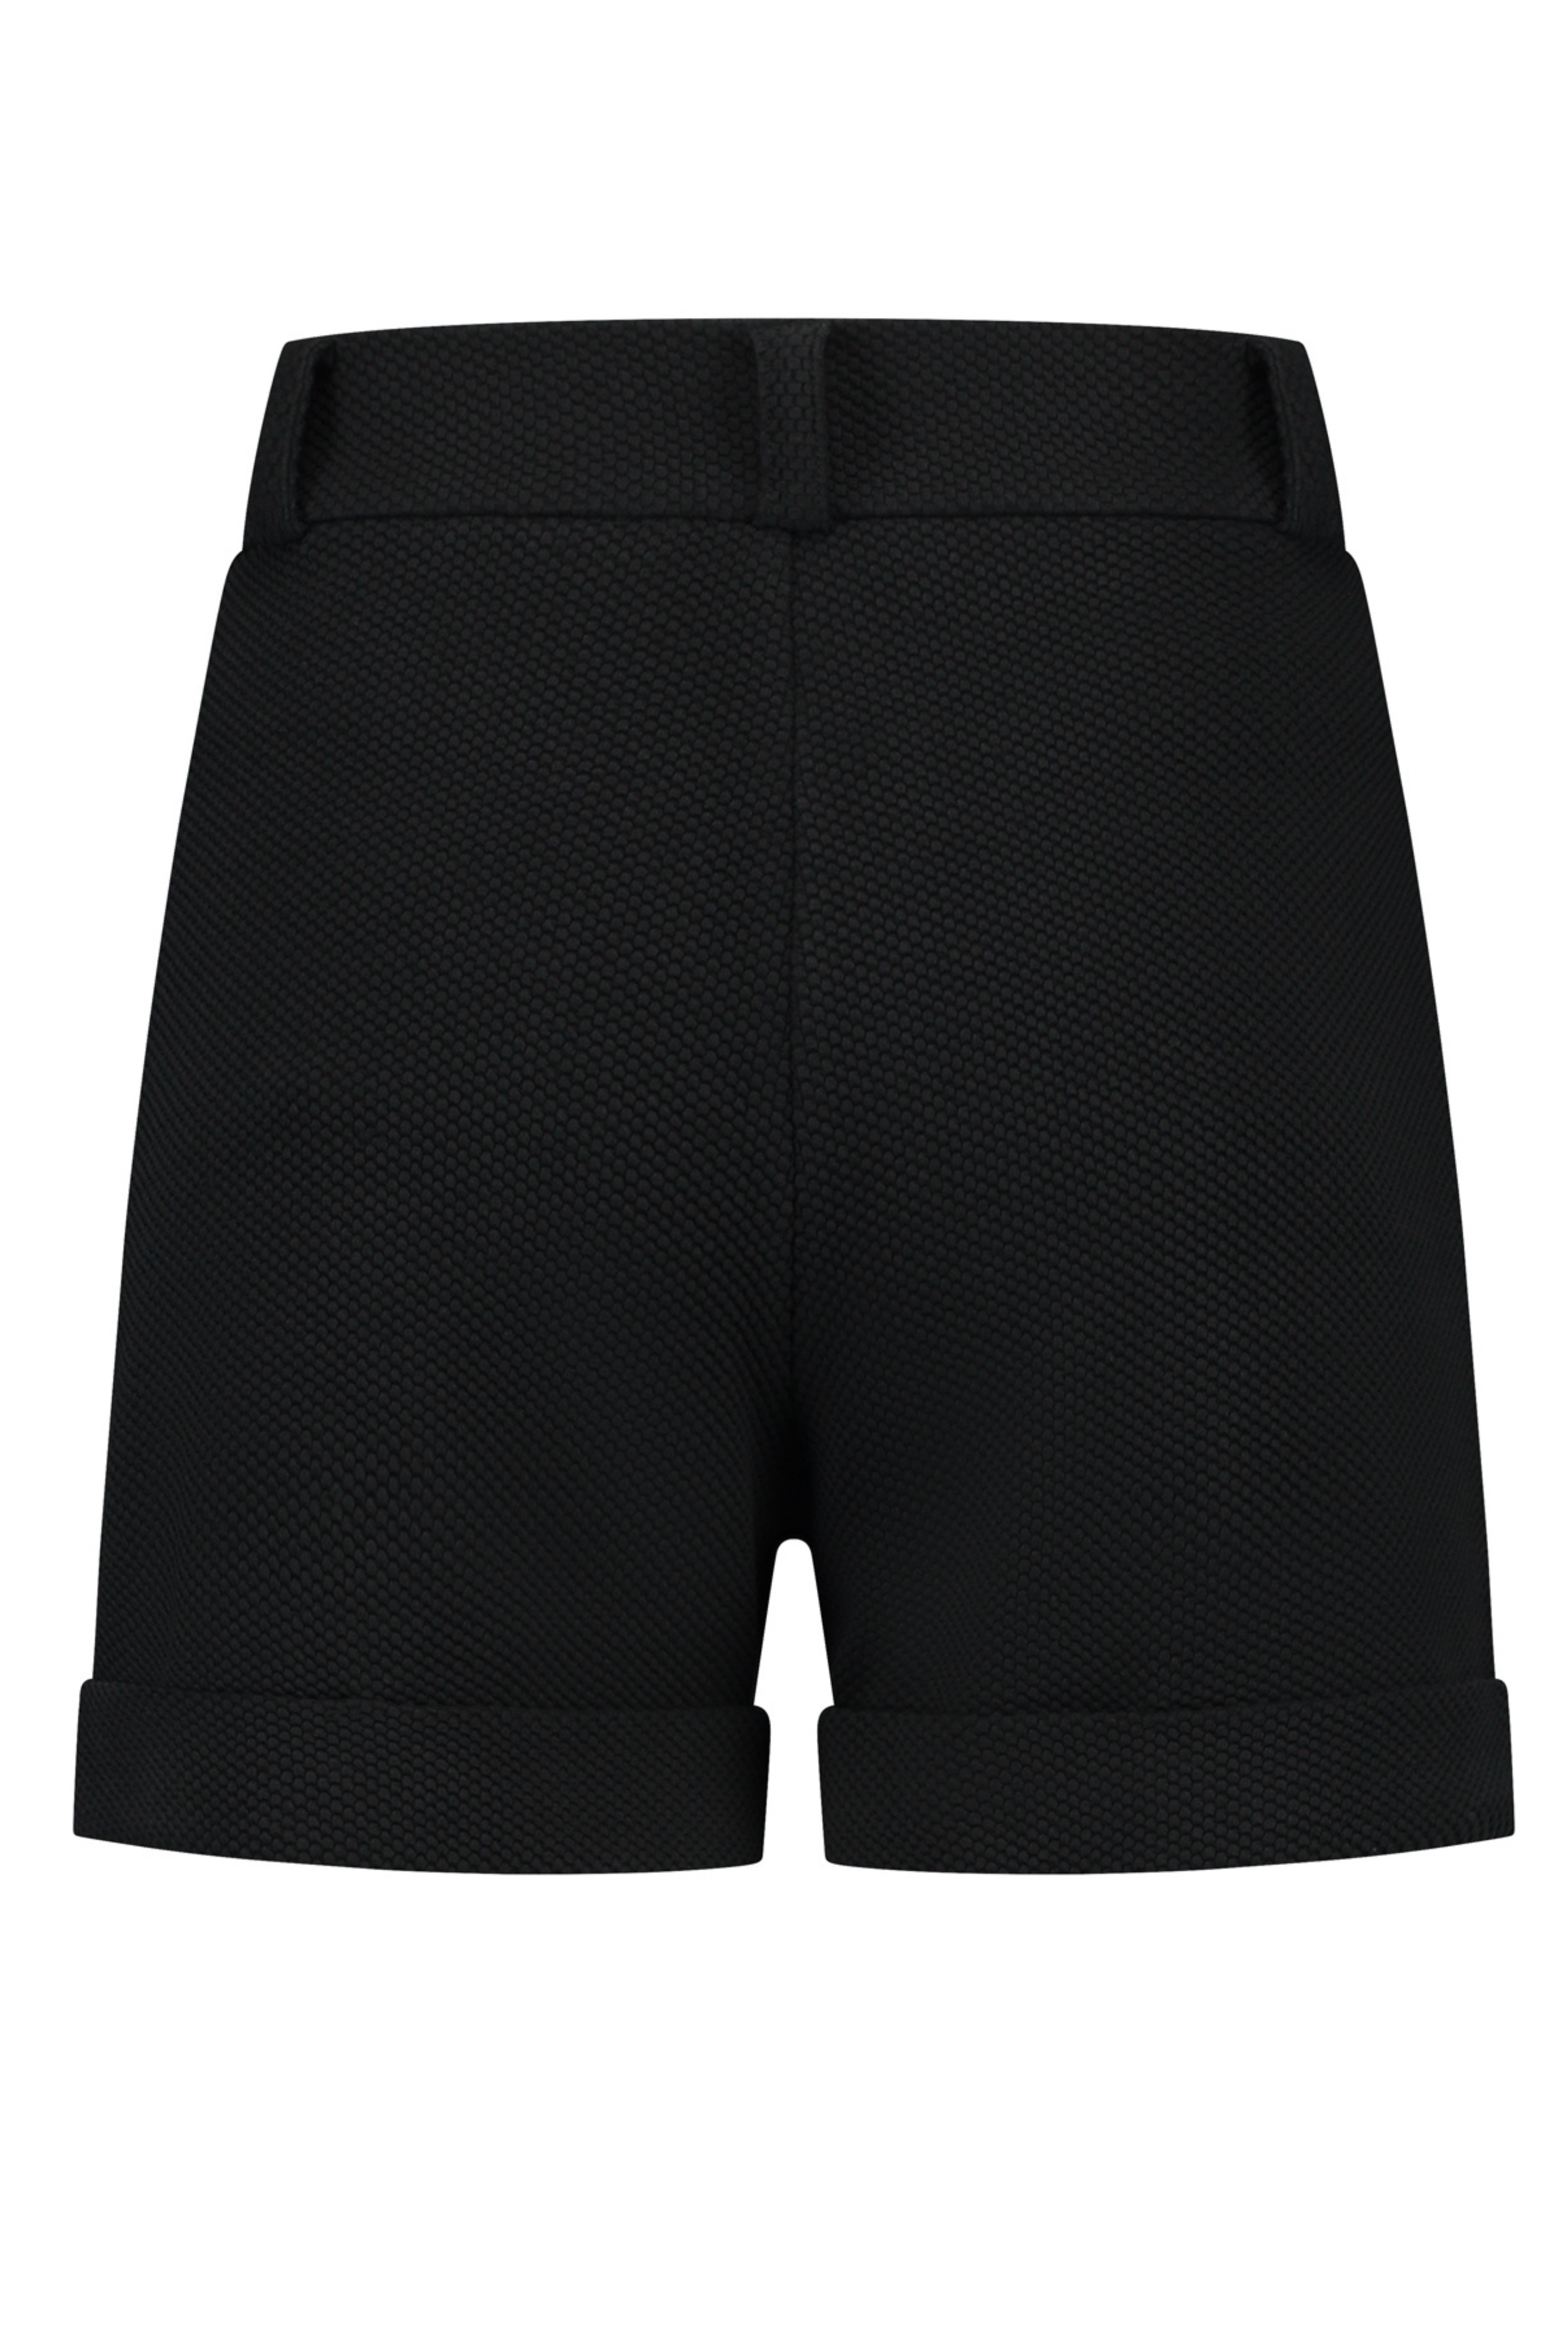 MOON CLASSIC wide leg shorts - Black